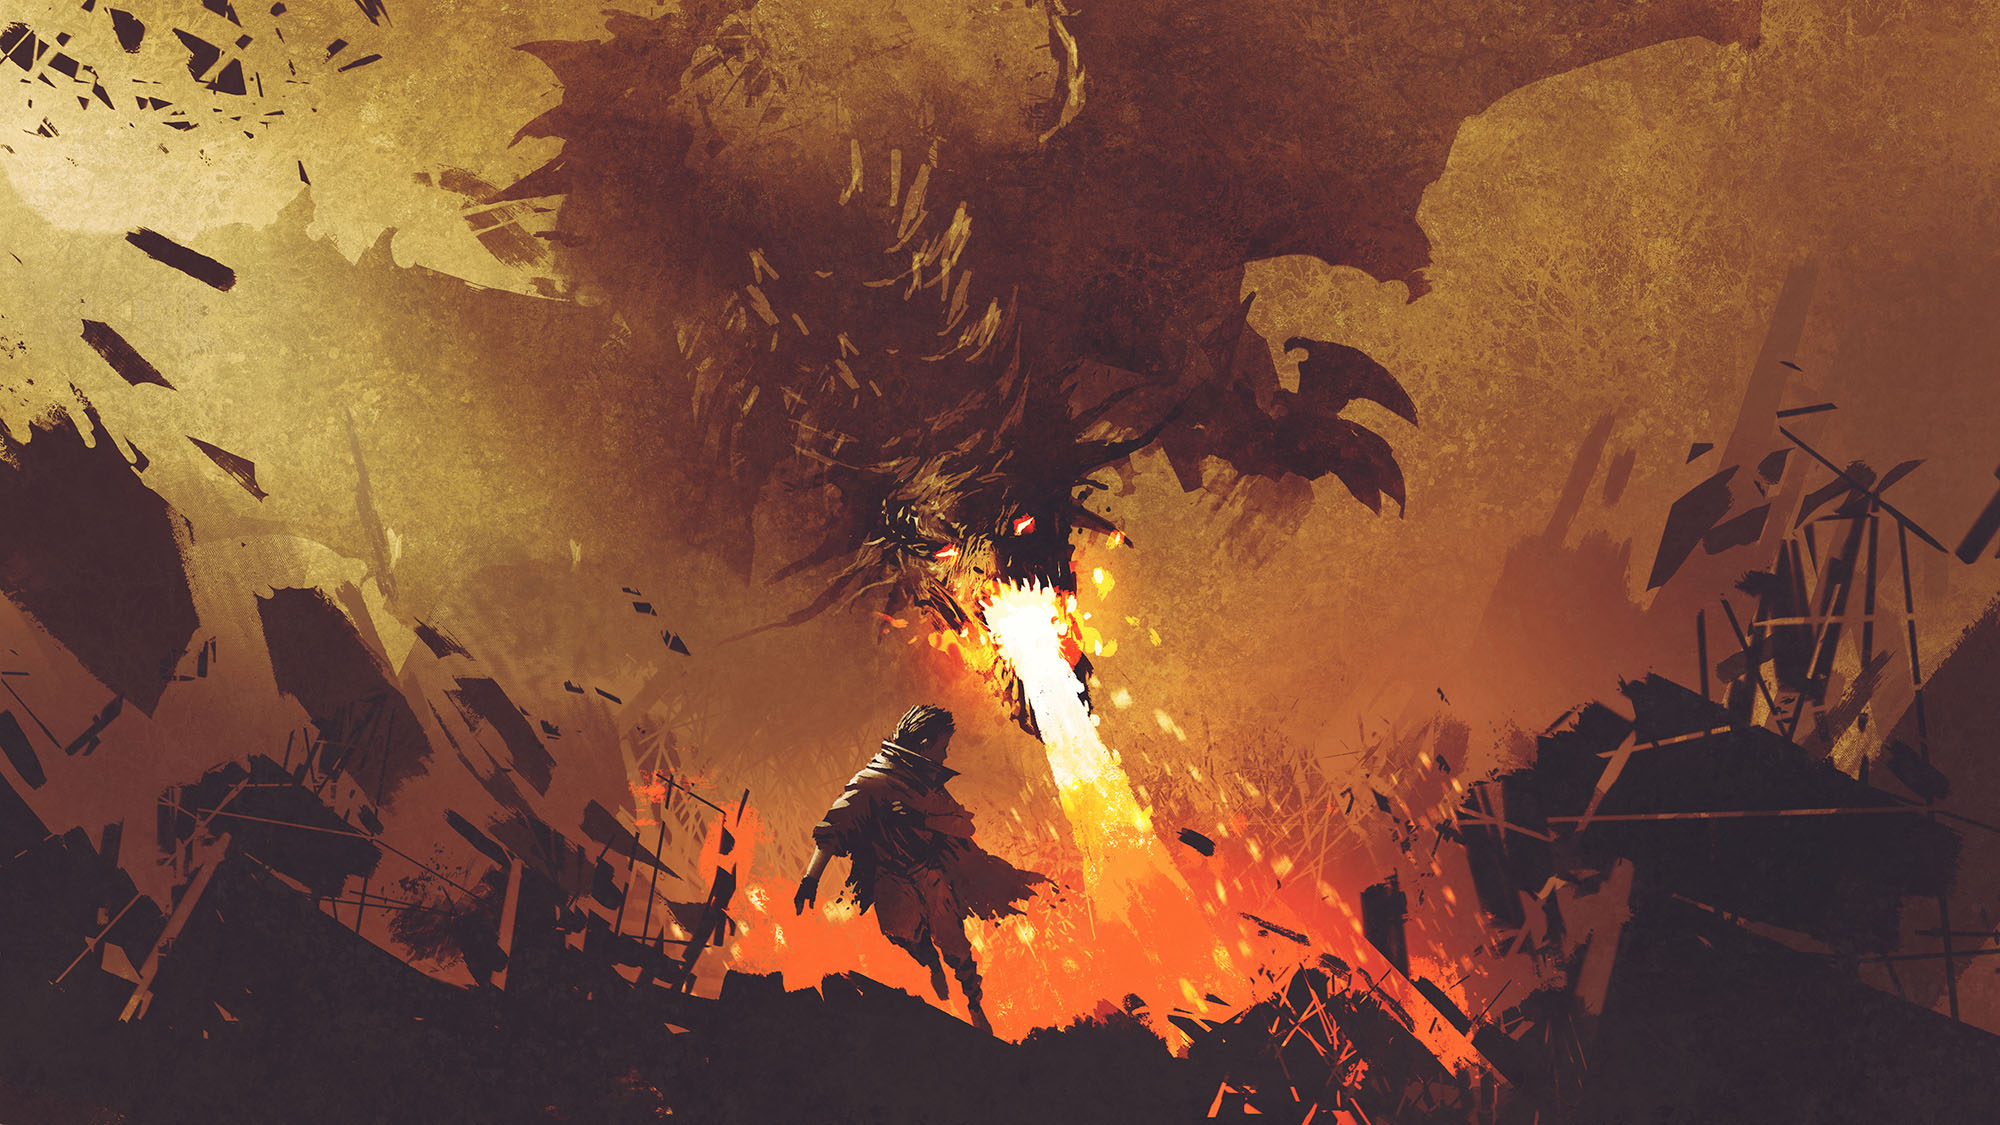 Dragon pursuing a fleeing figure, its fiery breath destroying the landscape.